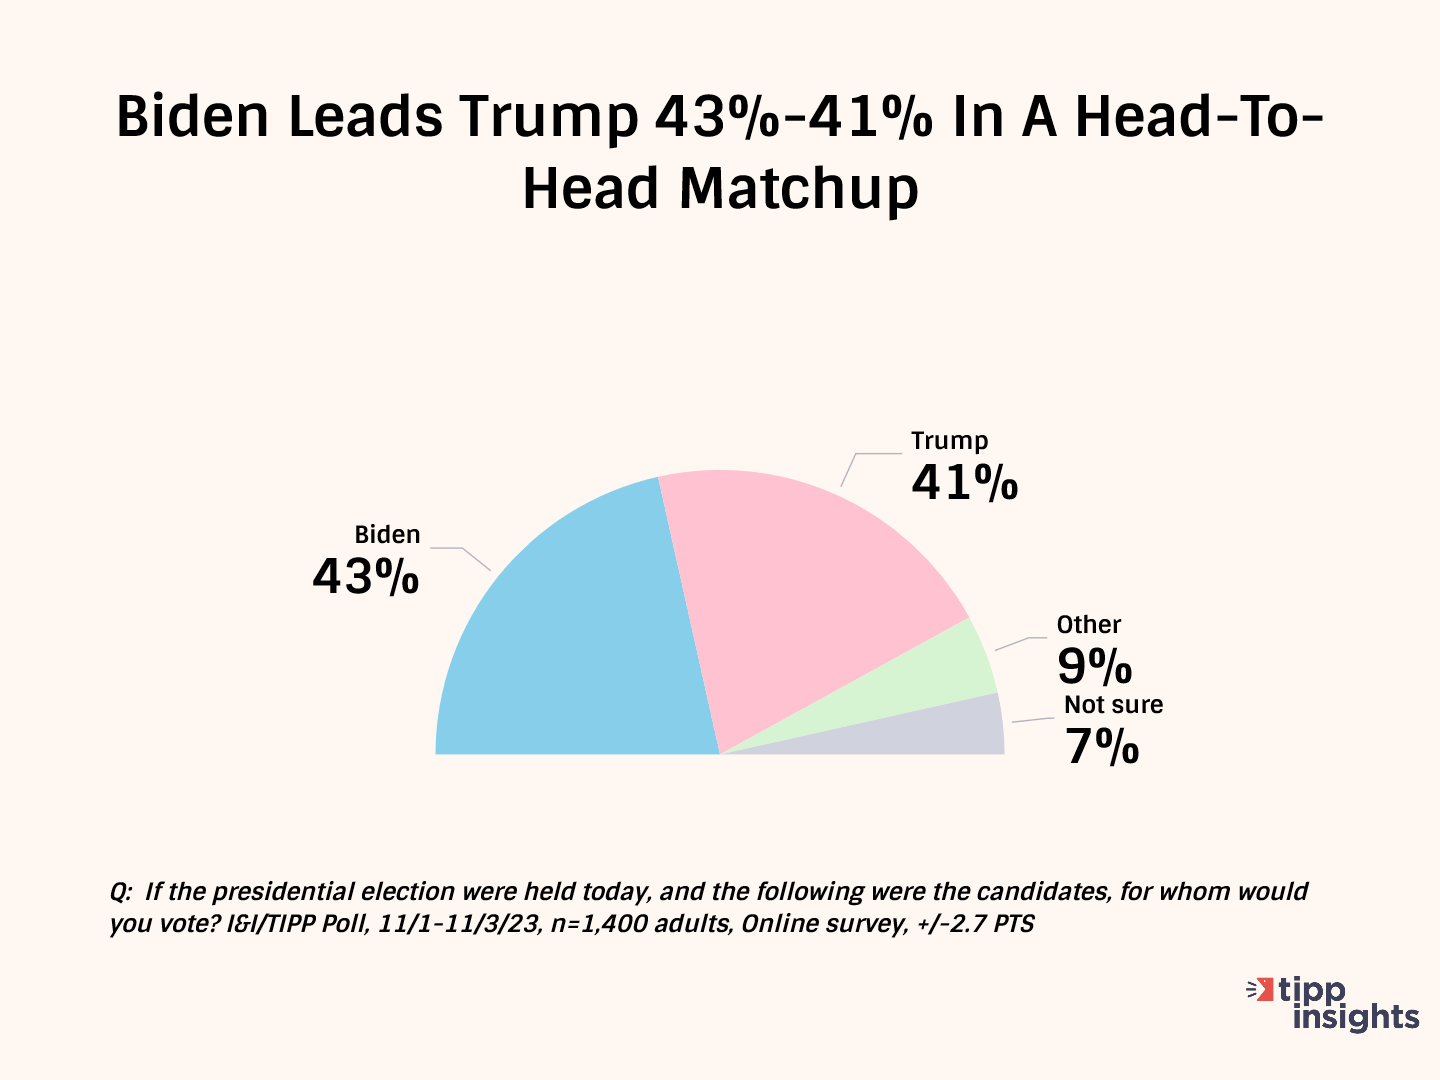 Biden-Trump In A Dead Heat As Women, Minorities Lift Trump: I&I/TIPP Poll